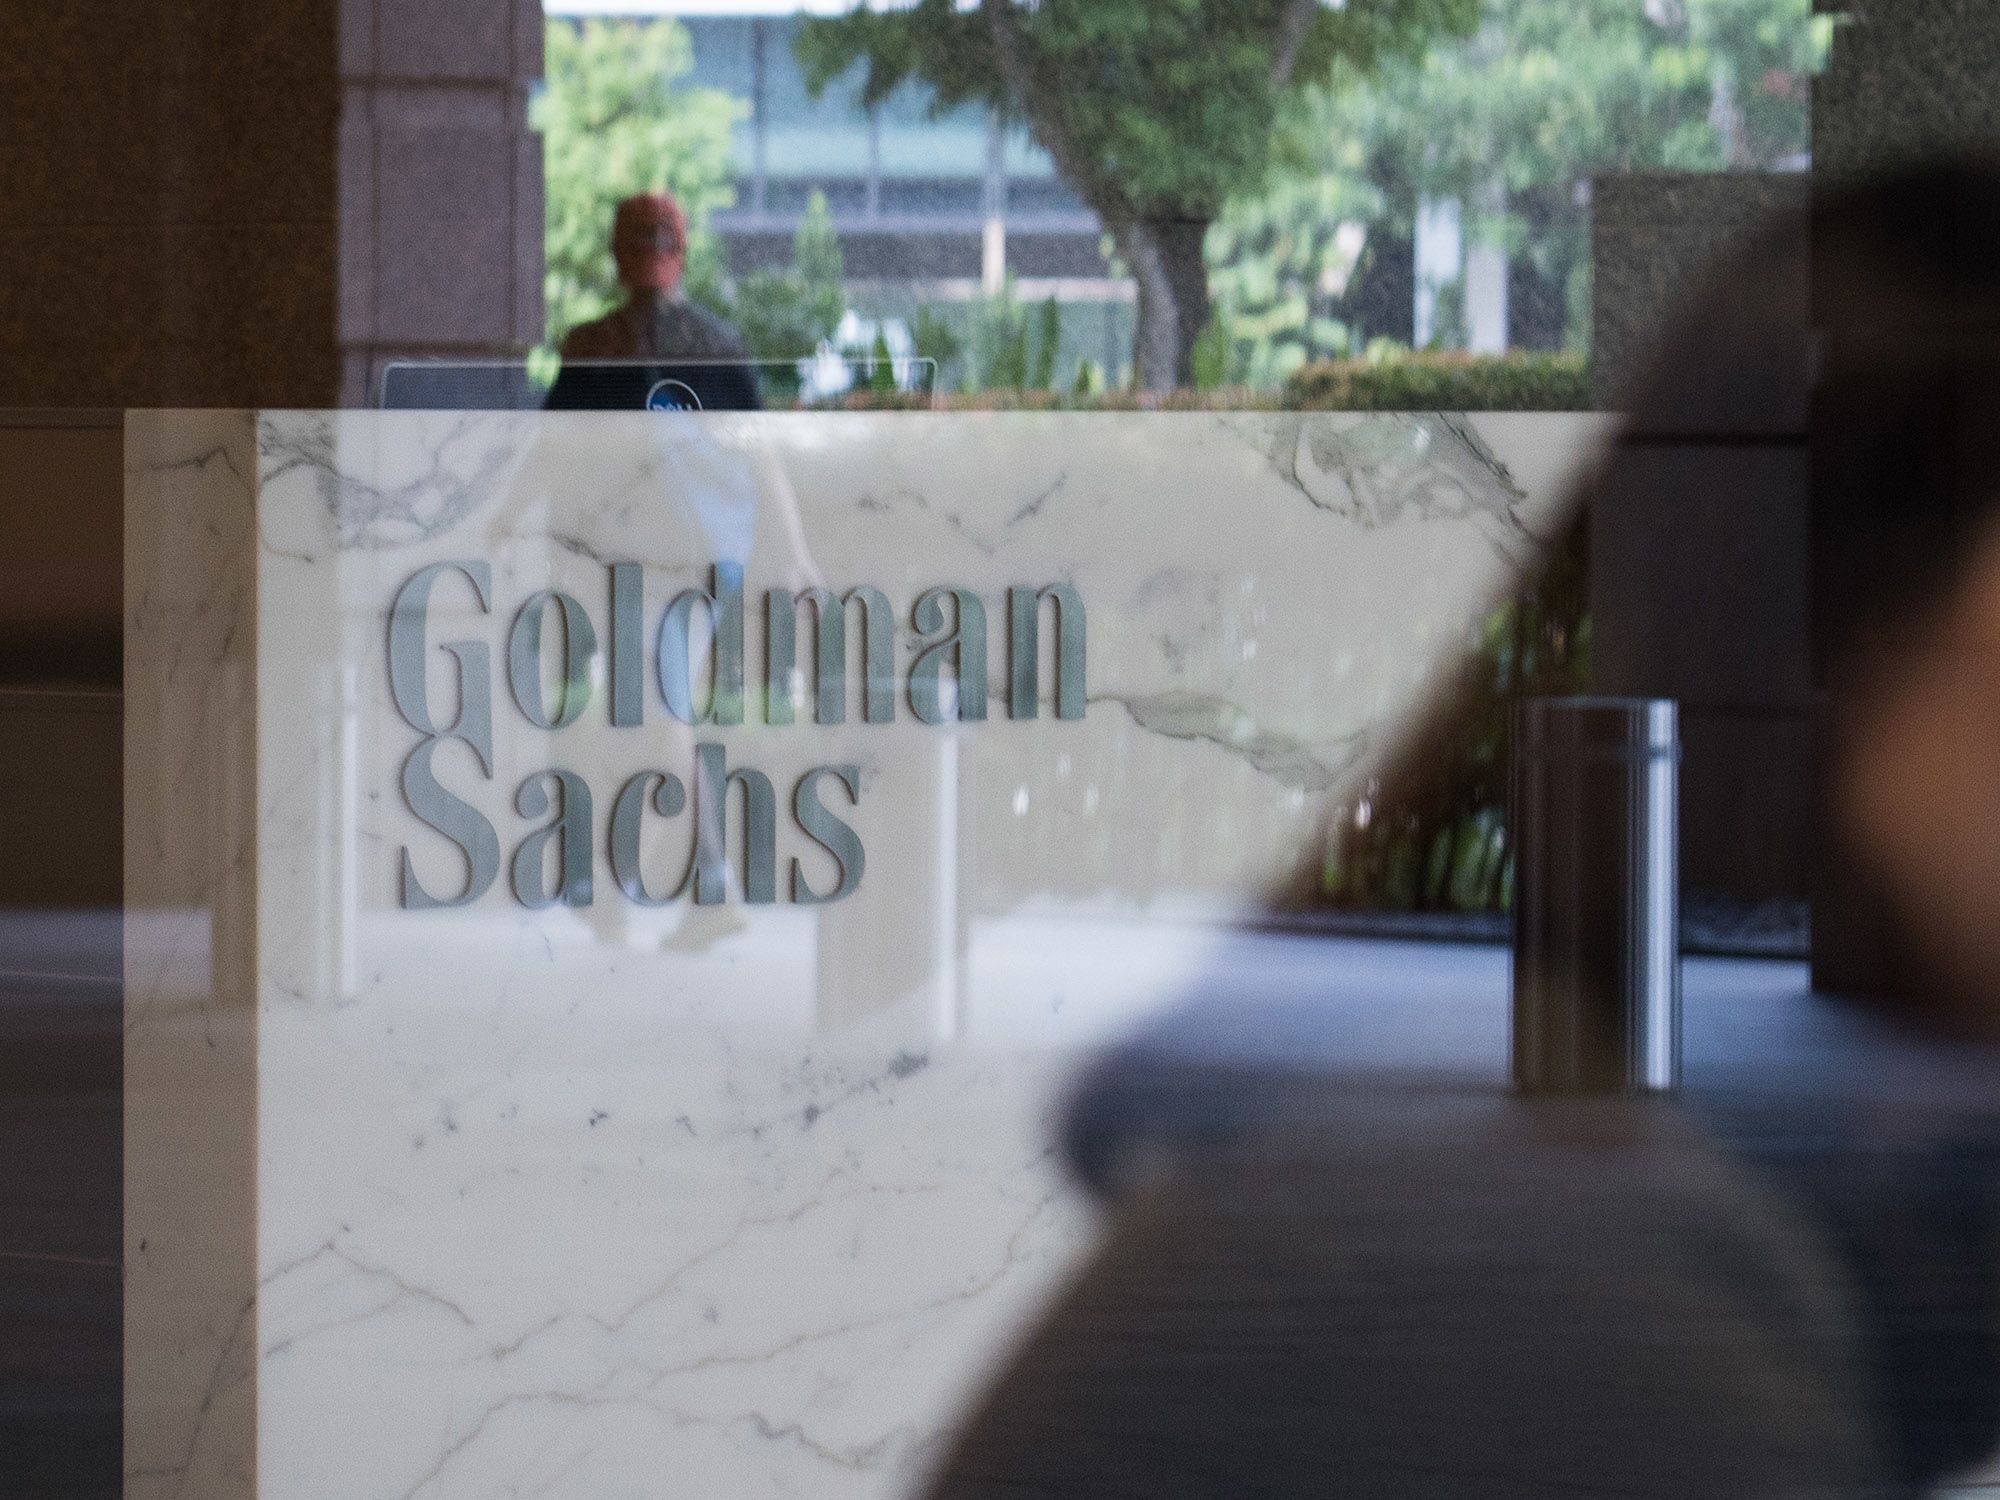 Goldman Sachs এবং ডেরিভেটিভ পাথ এফএক্স পেমেন্ট প্লেটোব্লকচেন ডেটা ইন্টেলিজেন্সে দলবদ্ধ। উল্লম্ব অনুসন্ধান. আ.